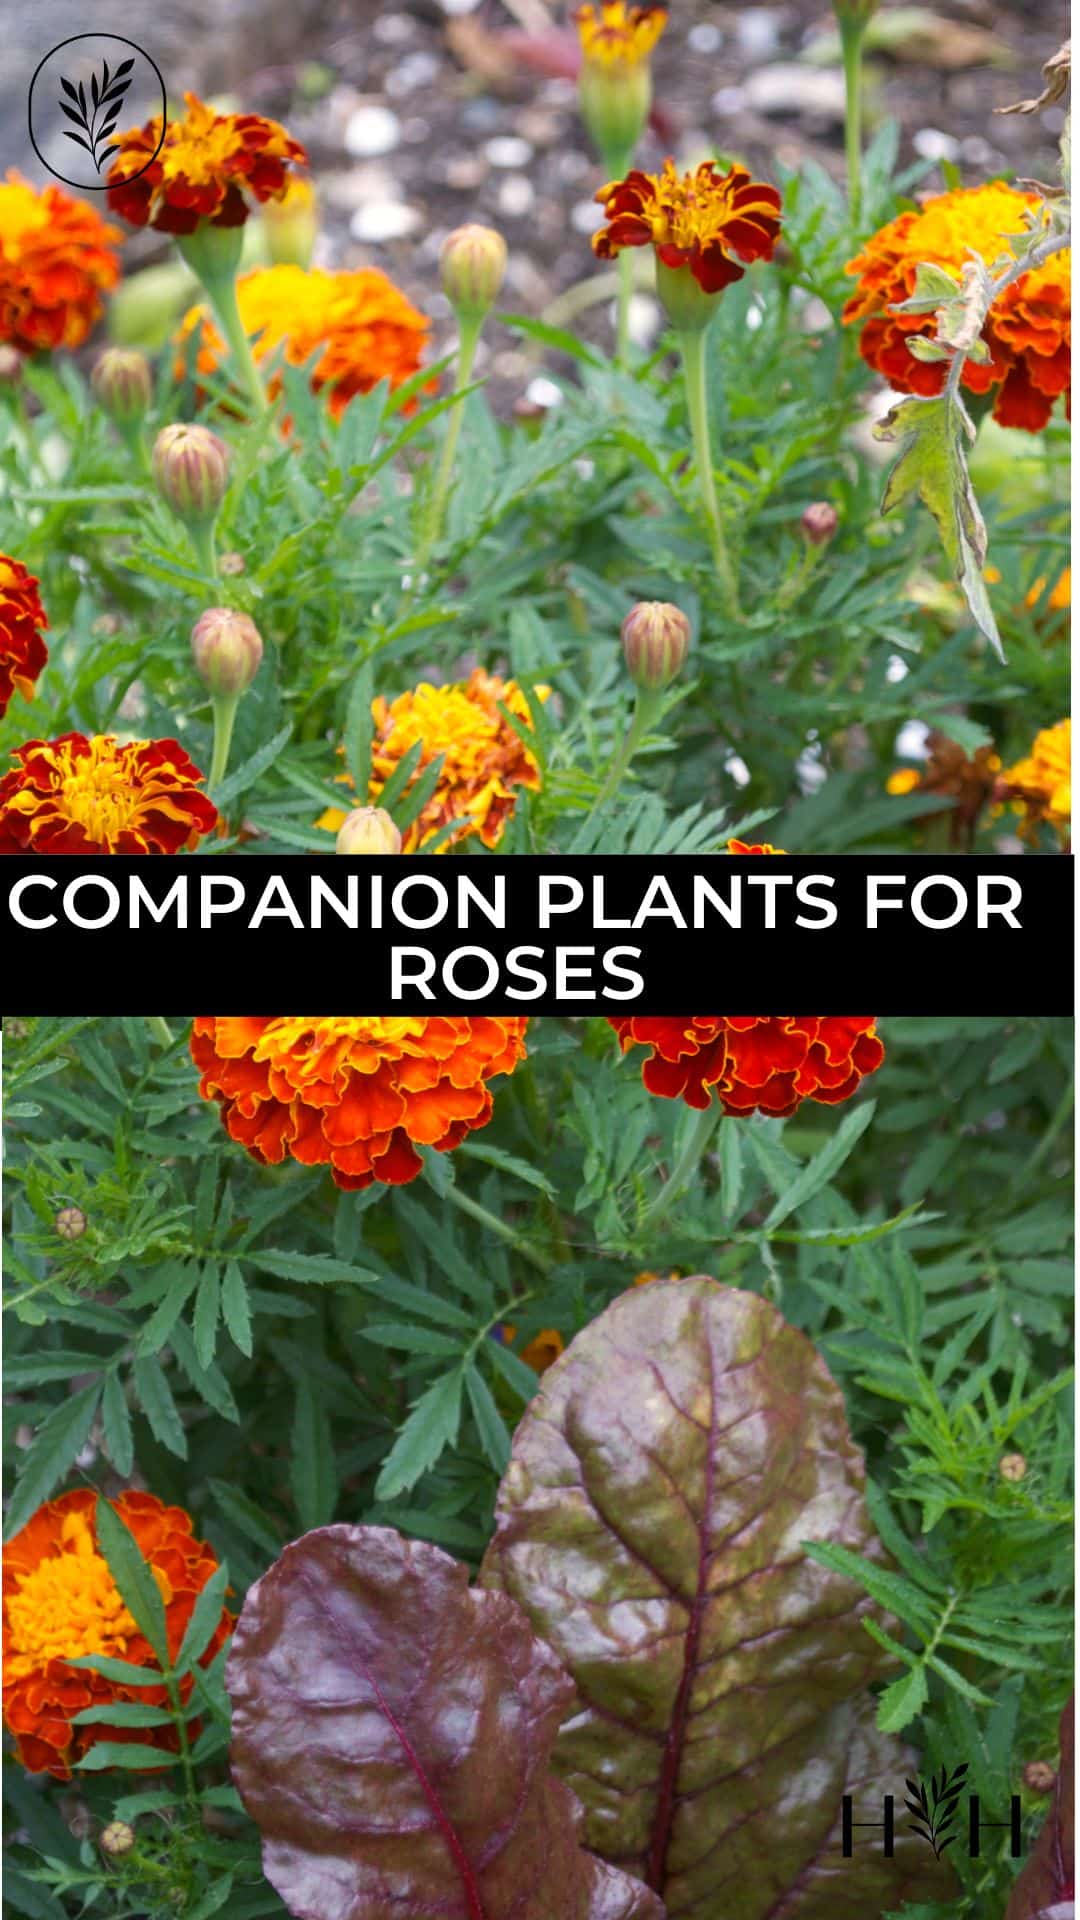 Companion plants for roses via @home4theharvest